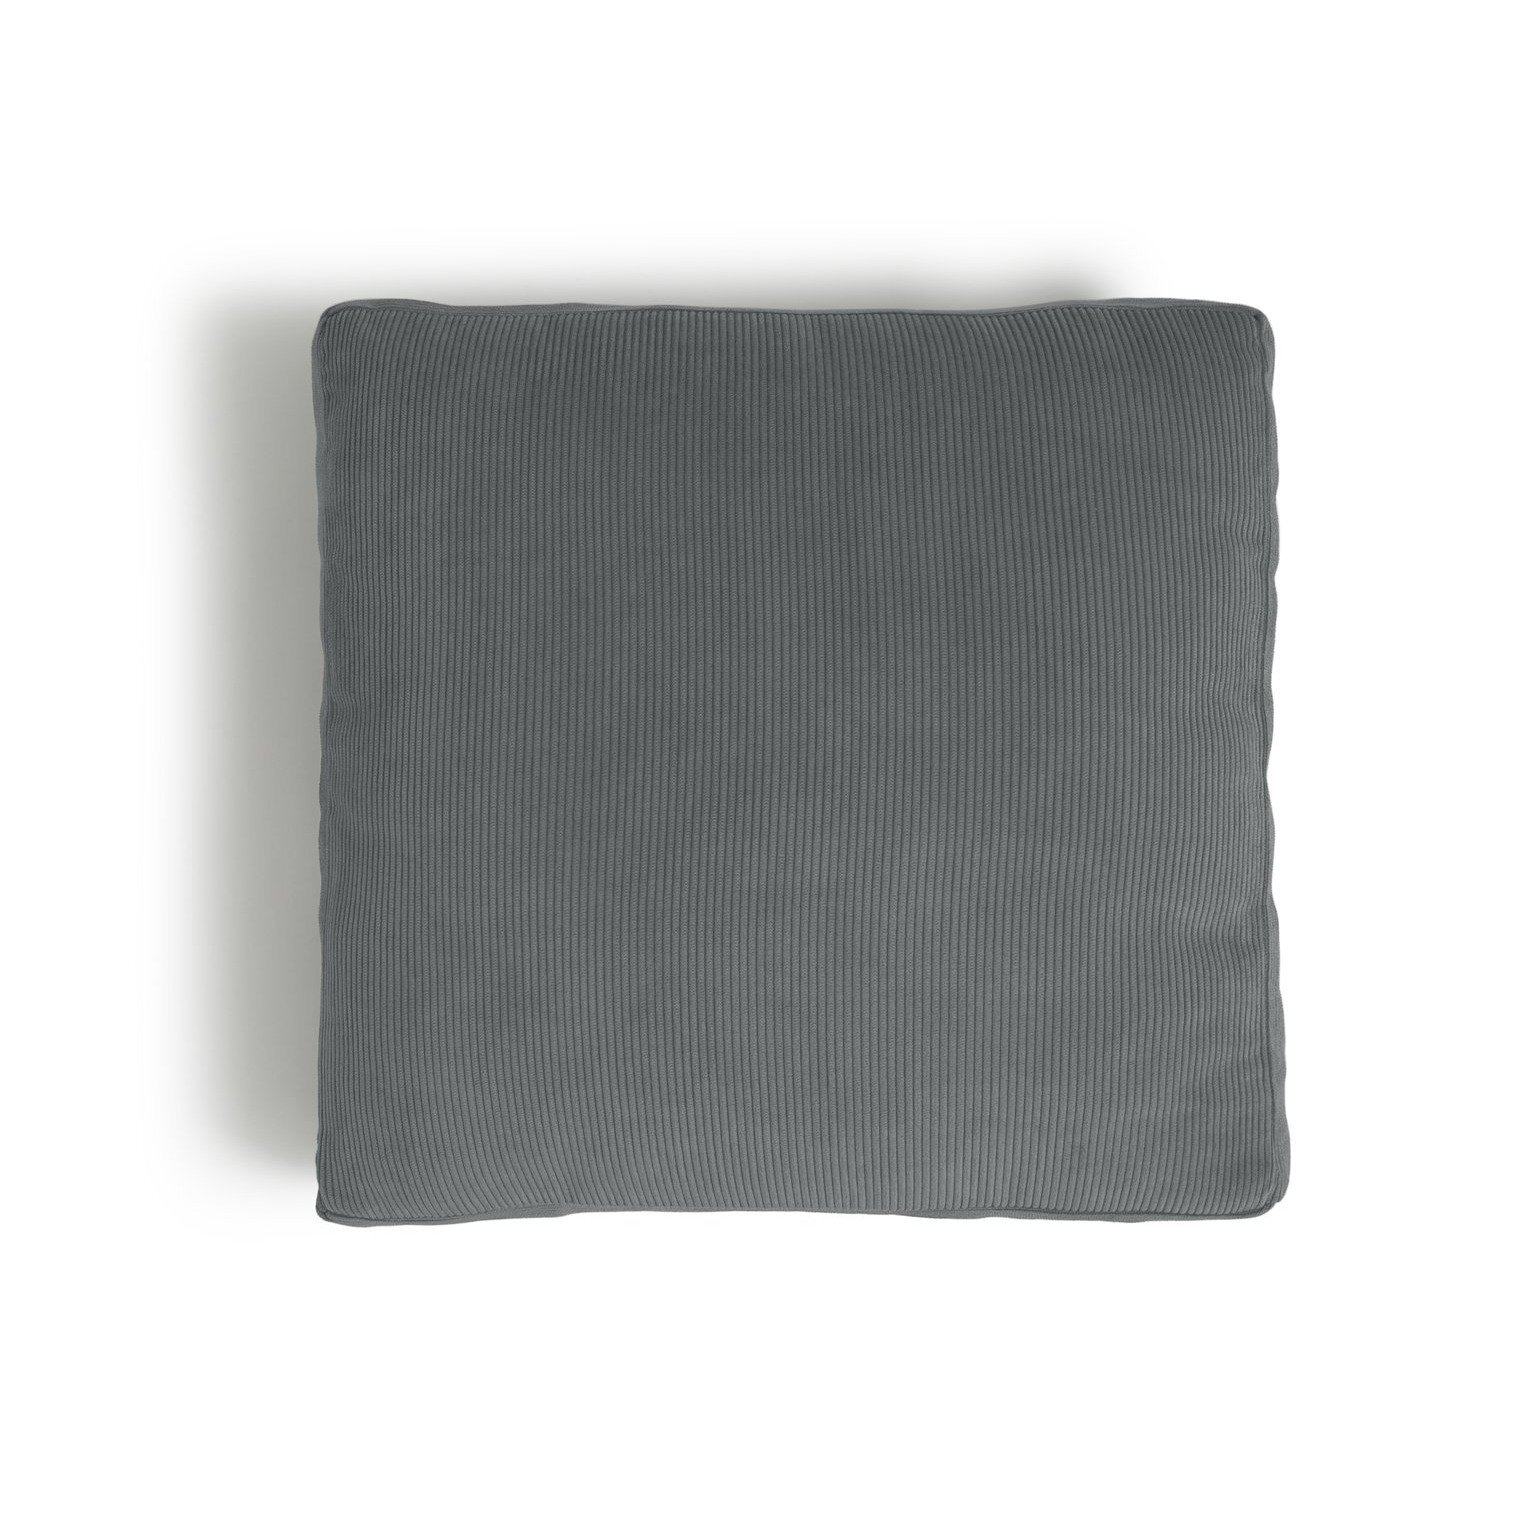 Habitat Cord Cushion Cover - Charcoal - 43x43cm - image 1